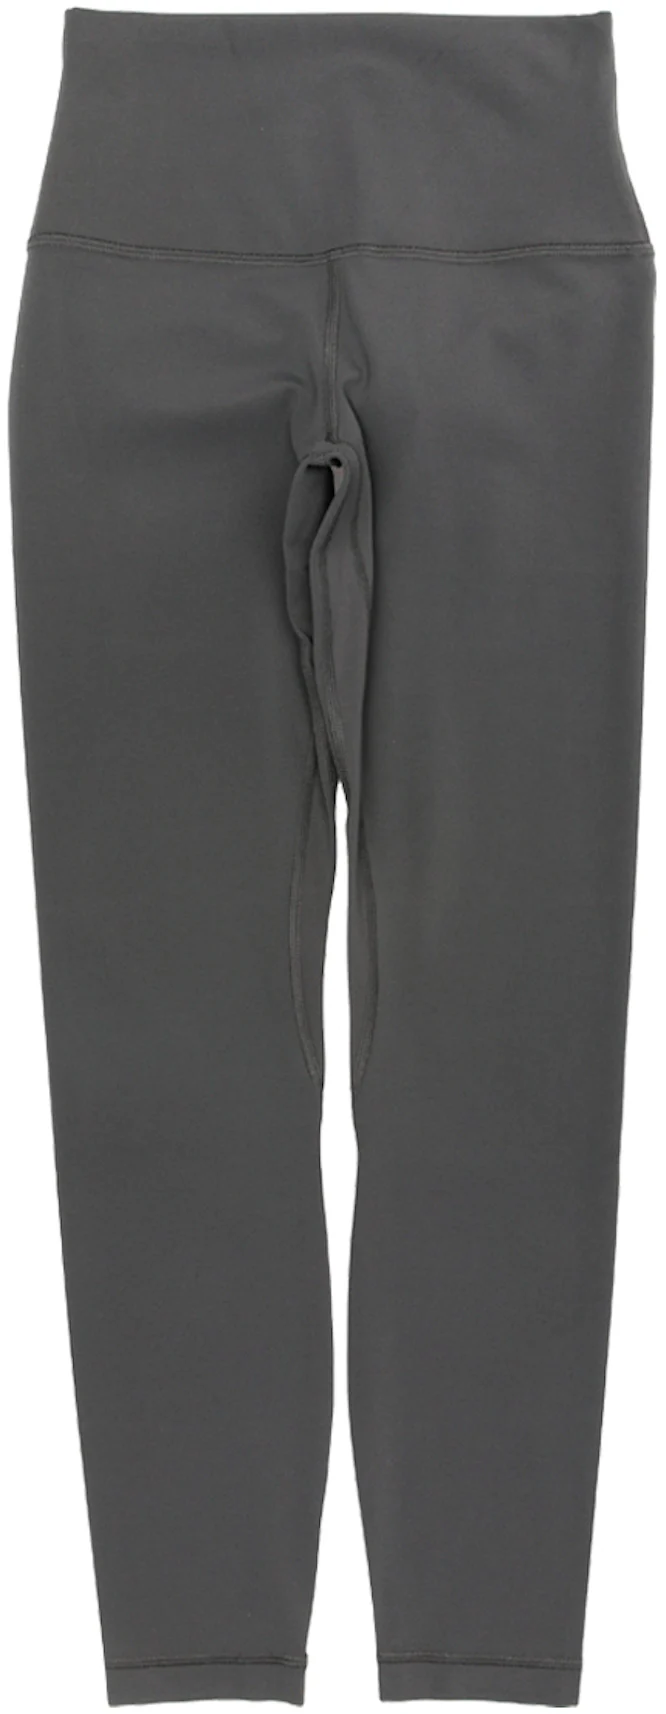 New Lululemon Zone In Tights Leggings Dark Slate Grey Yoga- Size 8 (bin 3M)